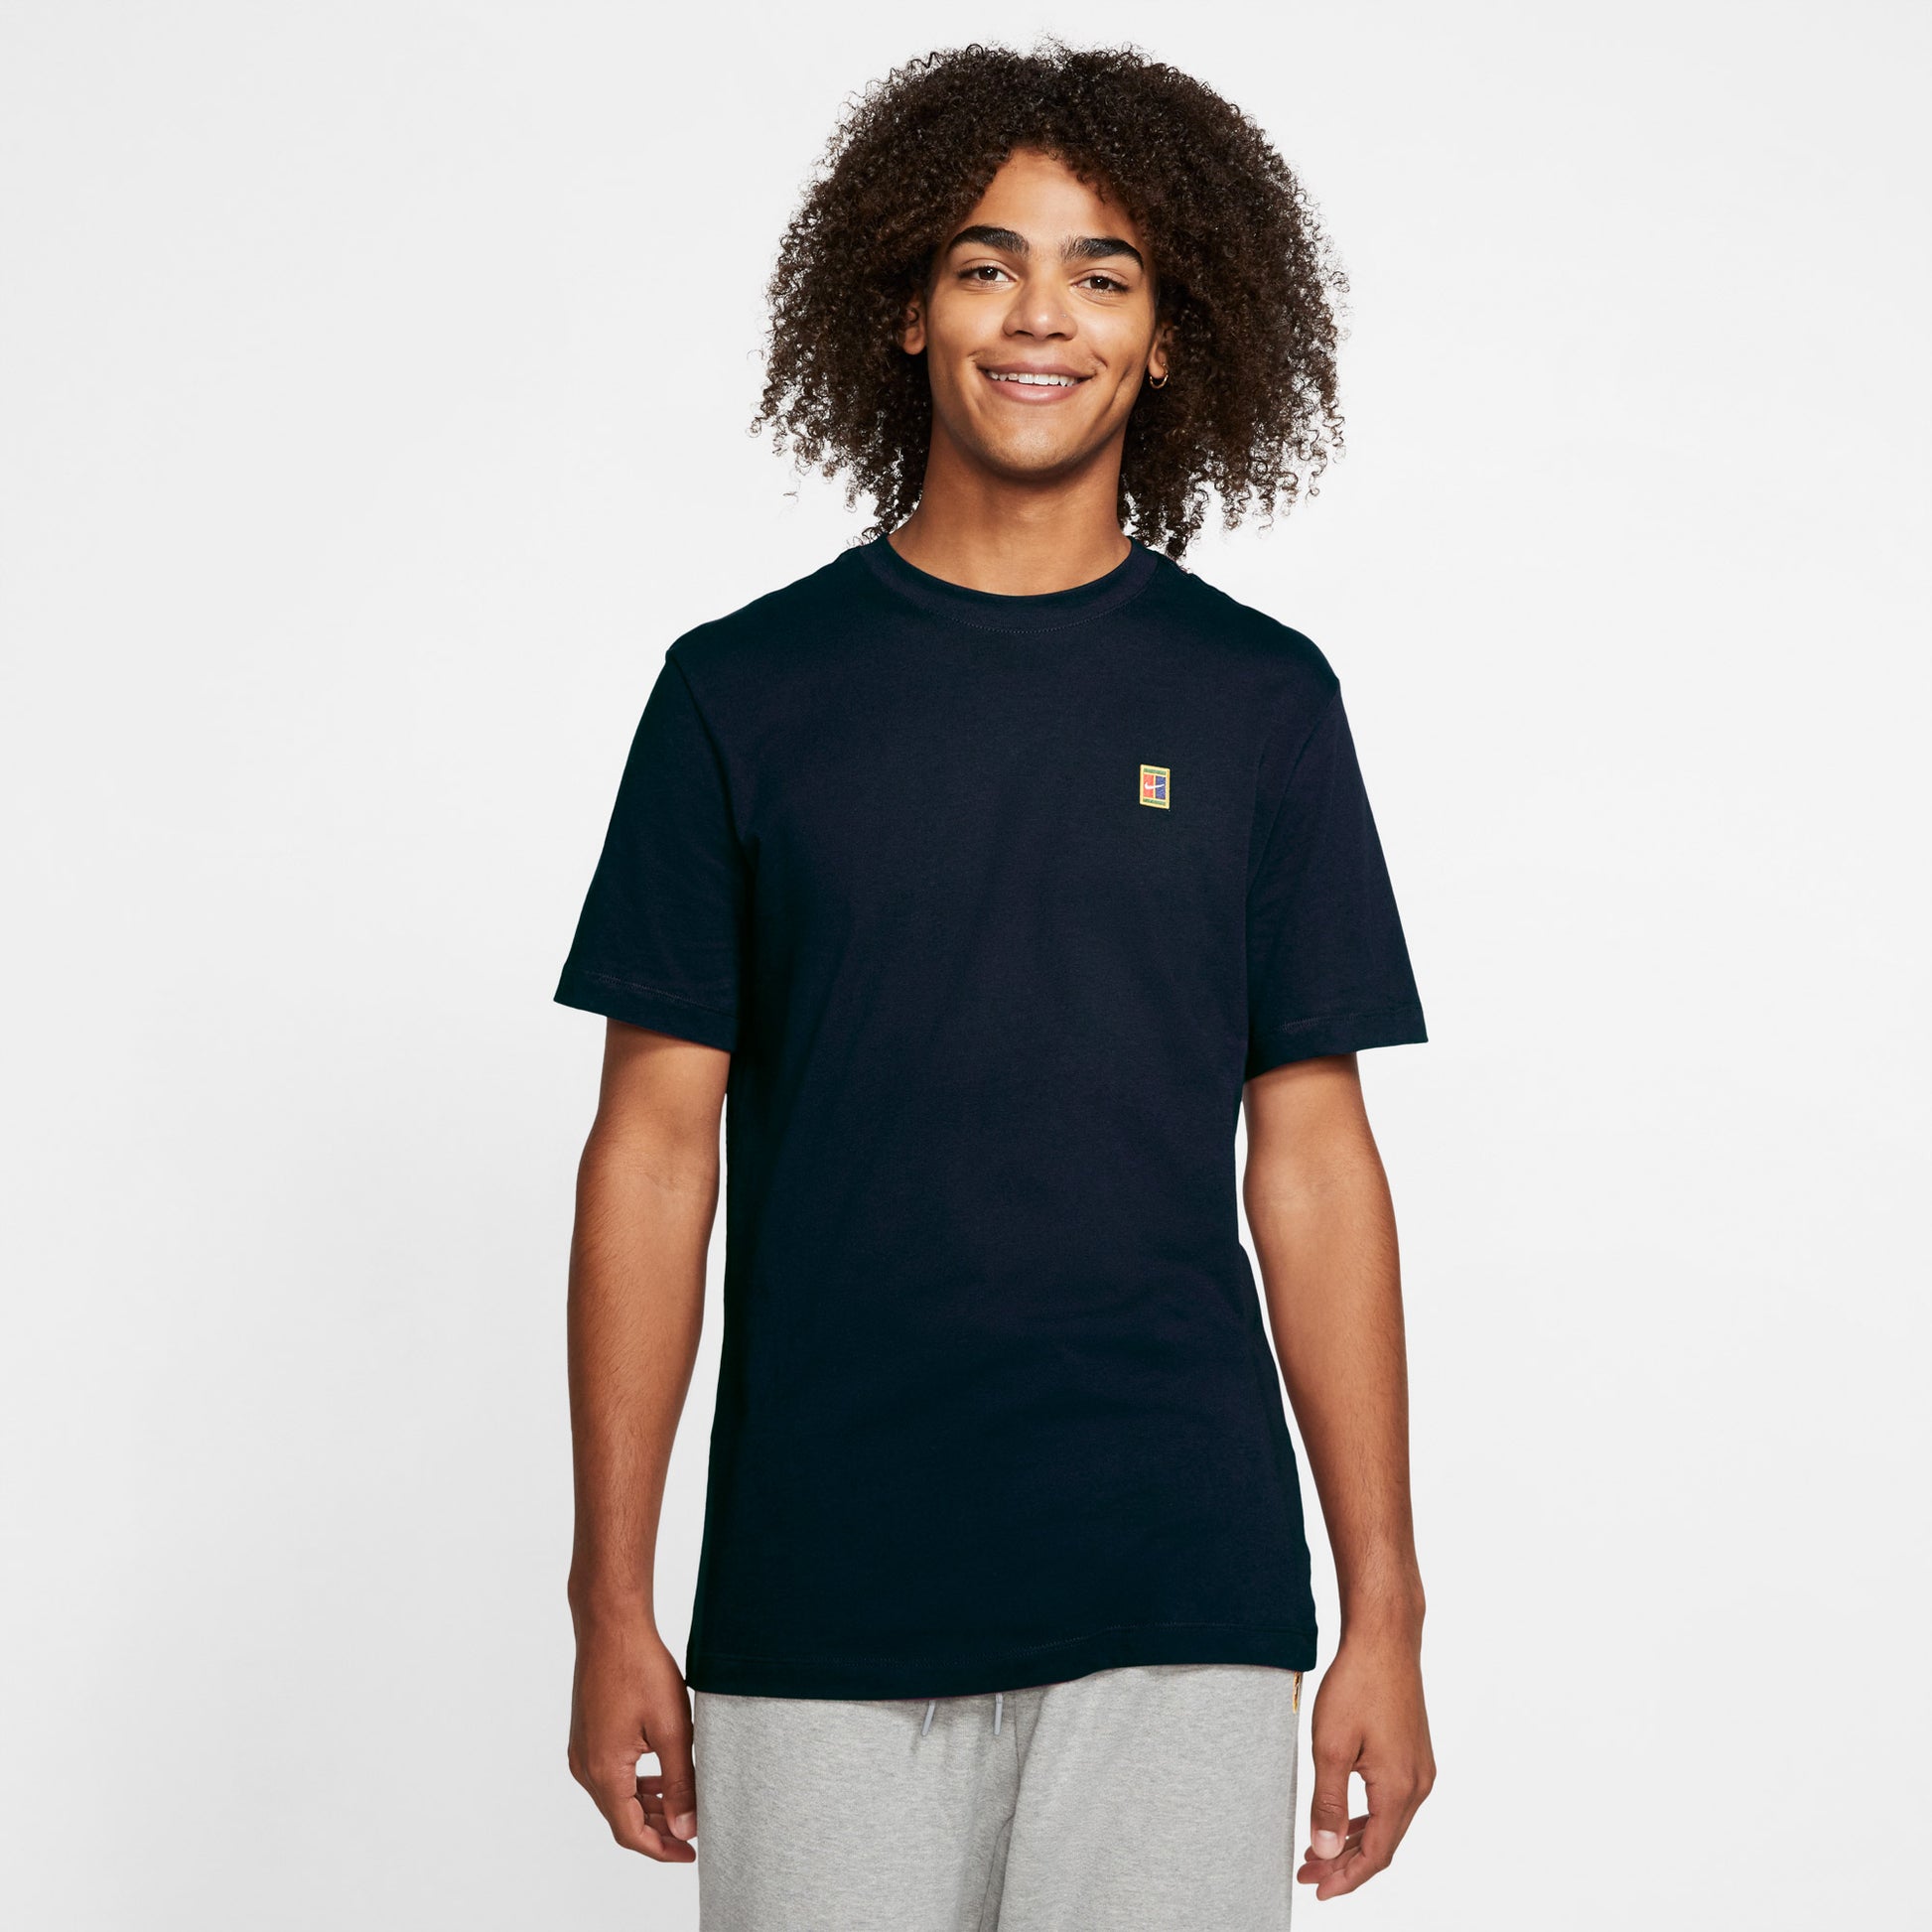 Nike Tennis T-Shirt – Tennis Only